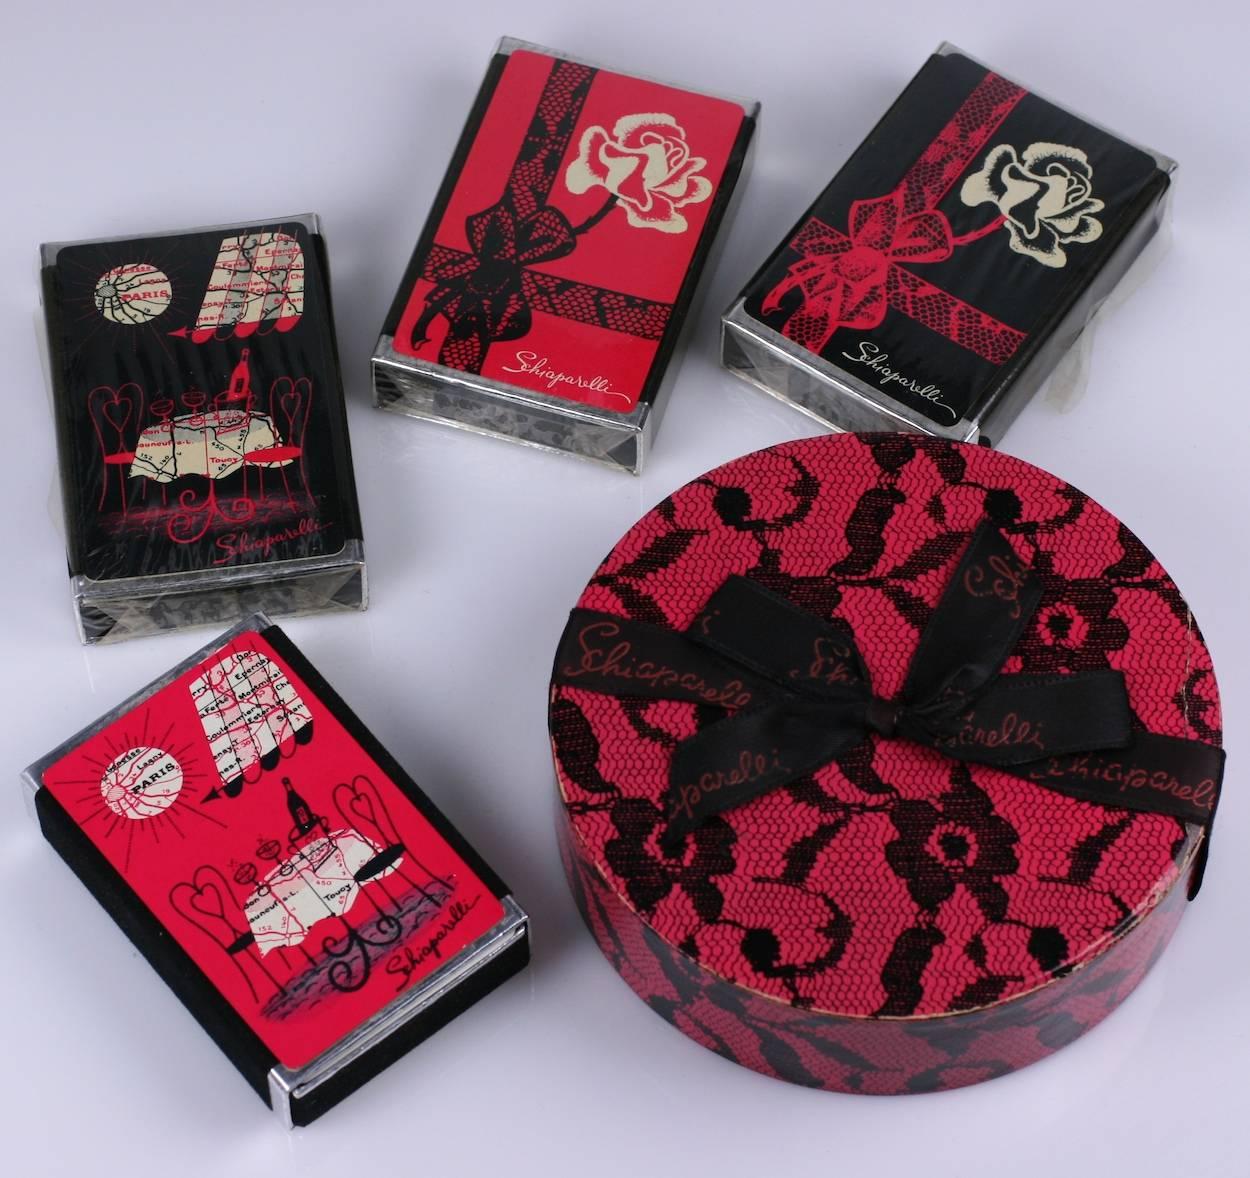 Black Elsa Schiaparelli's Surreal Miniature Hatbox of Playing Cards